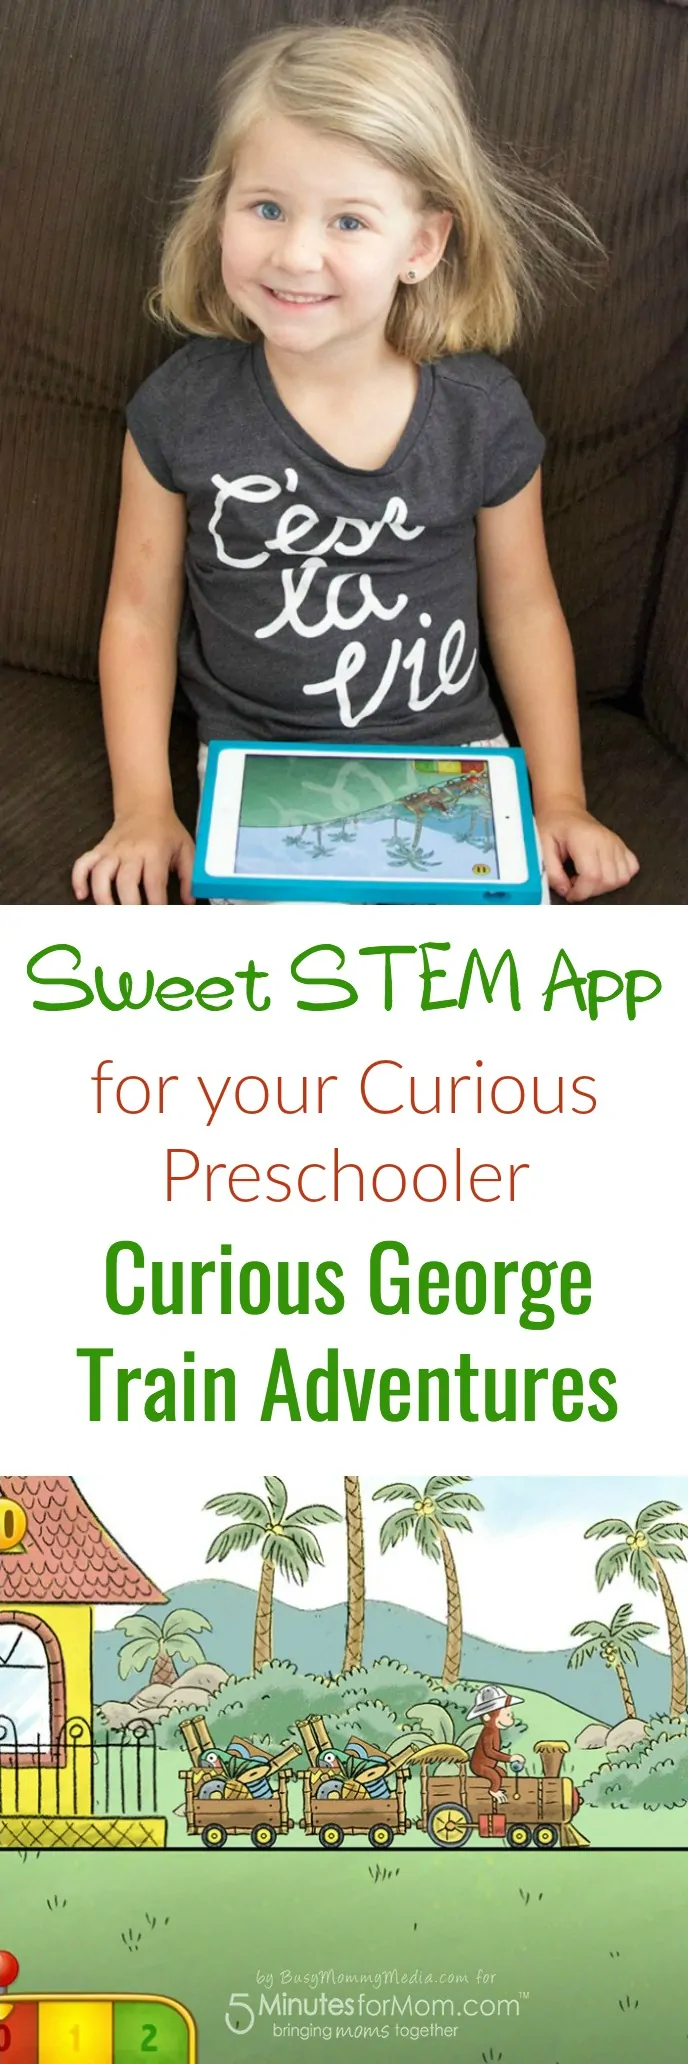 Sweet STEM App for your Curious Preschooler - Curious George Train Adventures